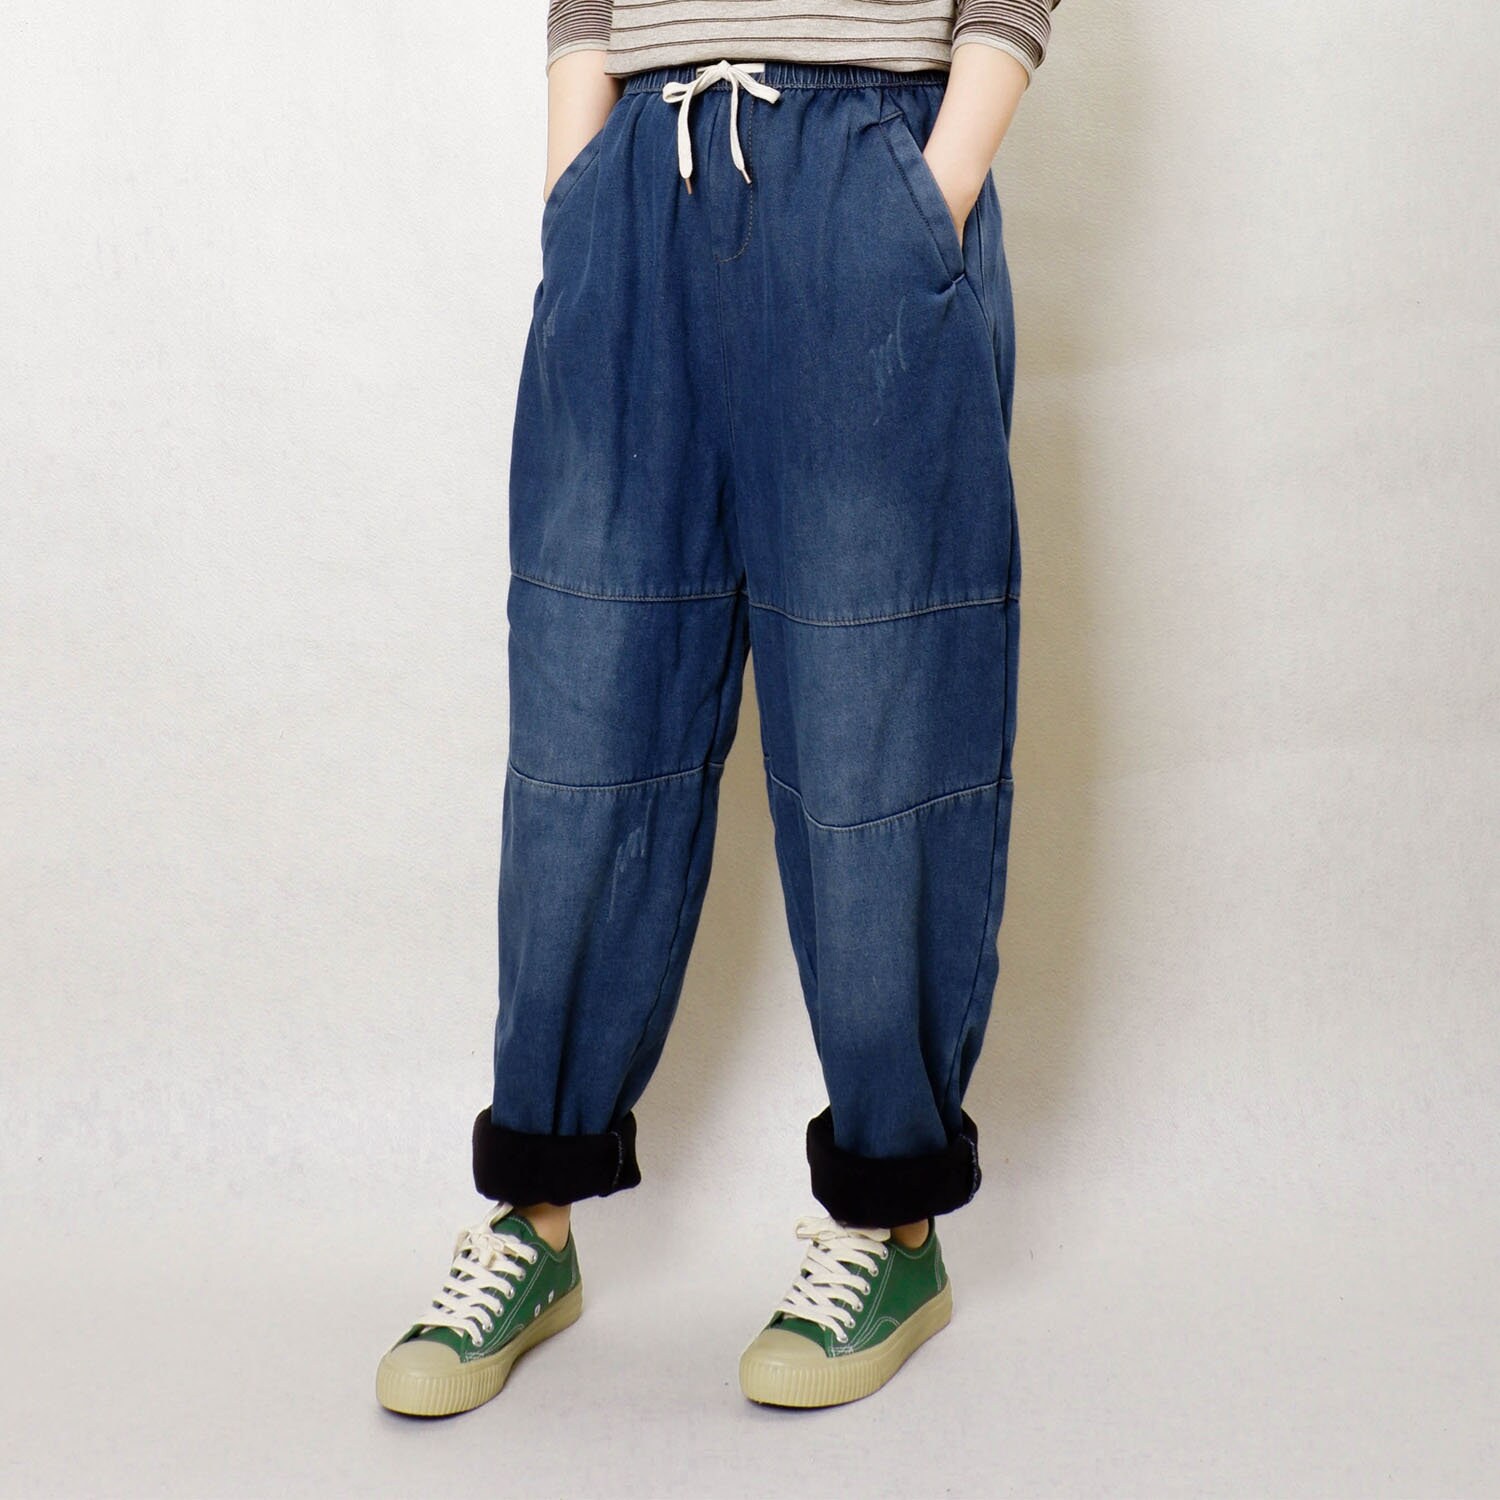 Women Blue Denim Pants Elastic Waist Jeans With Drawstring - Etsy